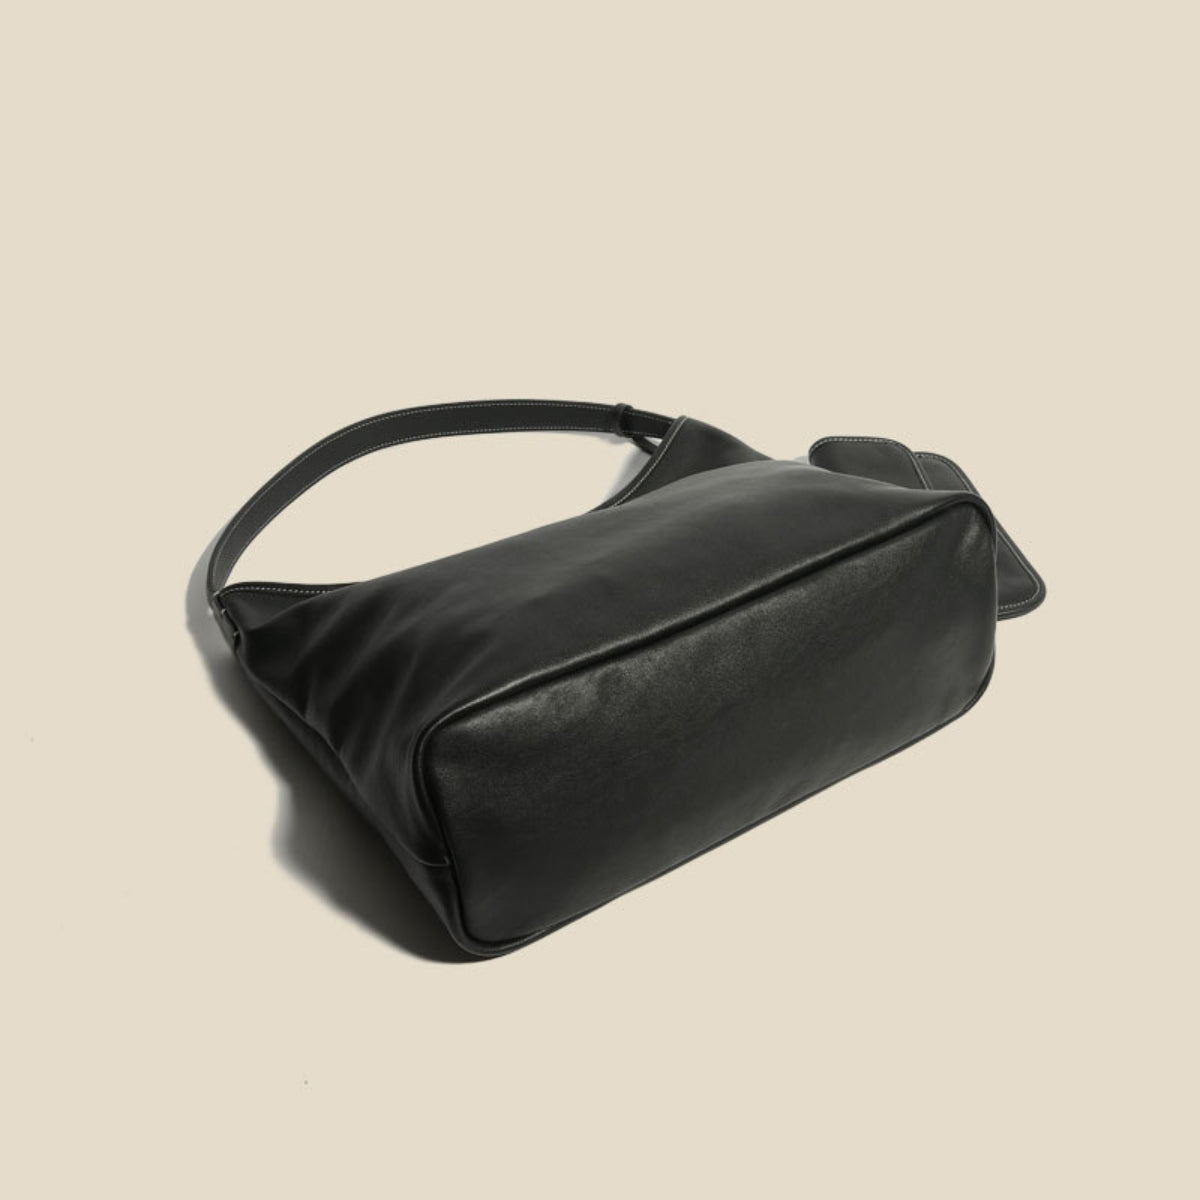 Shoulder Bag Large Capacity Crossbody Bag For Work And Commuting